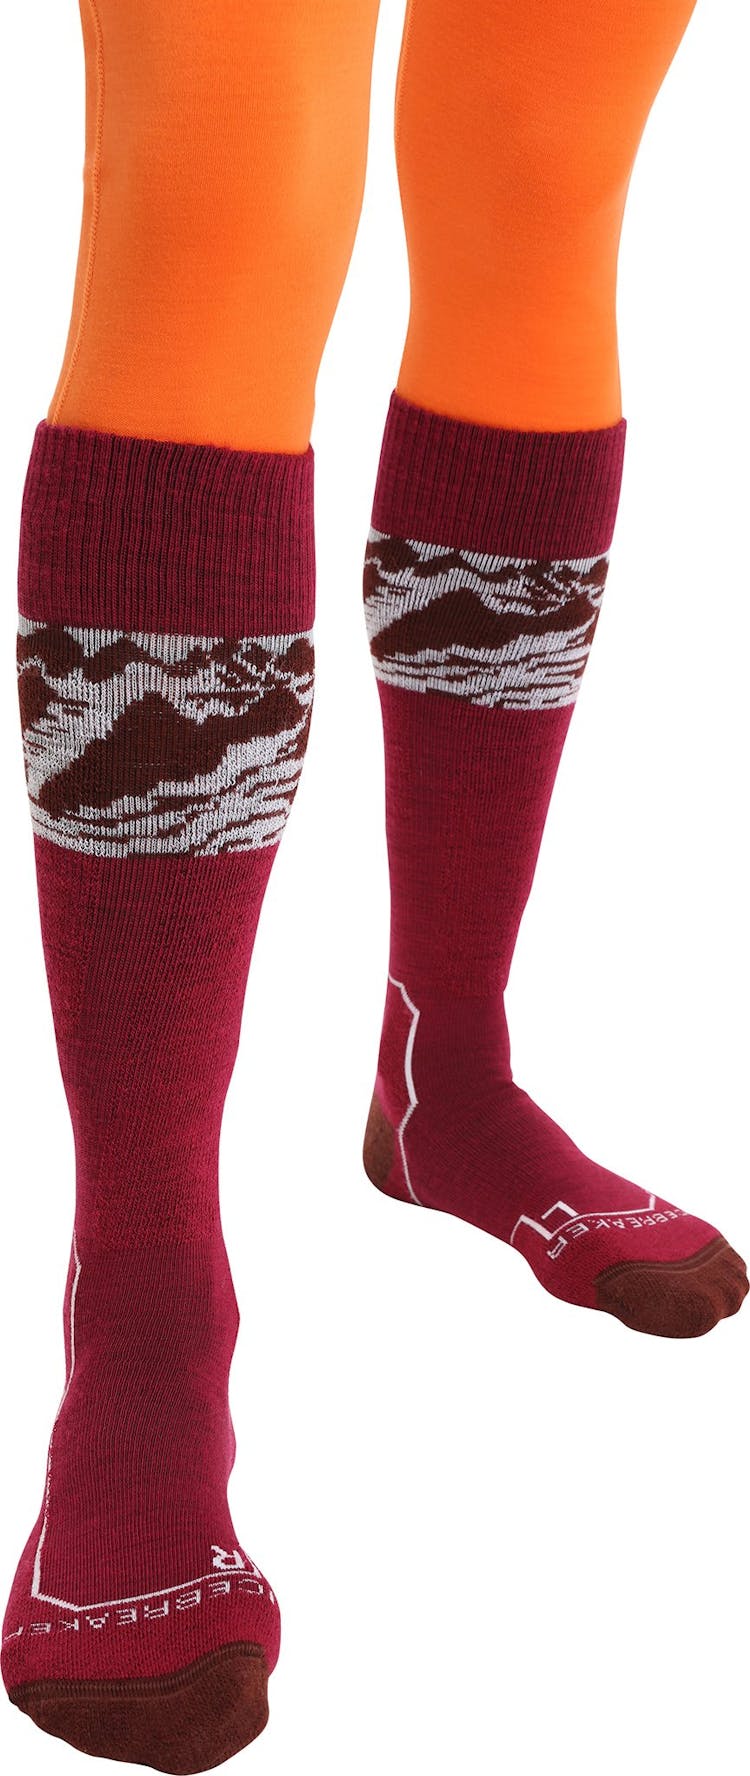 Product gallery image number 3 for product Ski+ Light OTC Socks - Women's